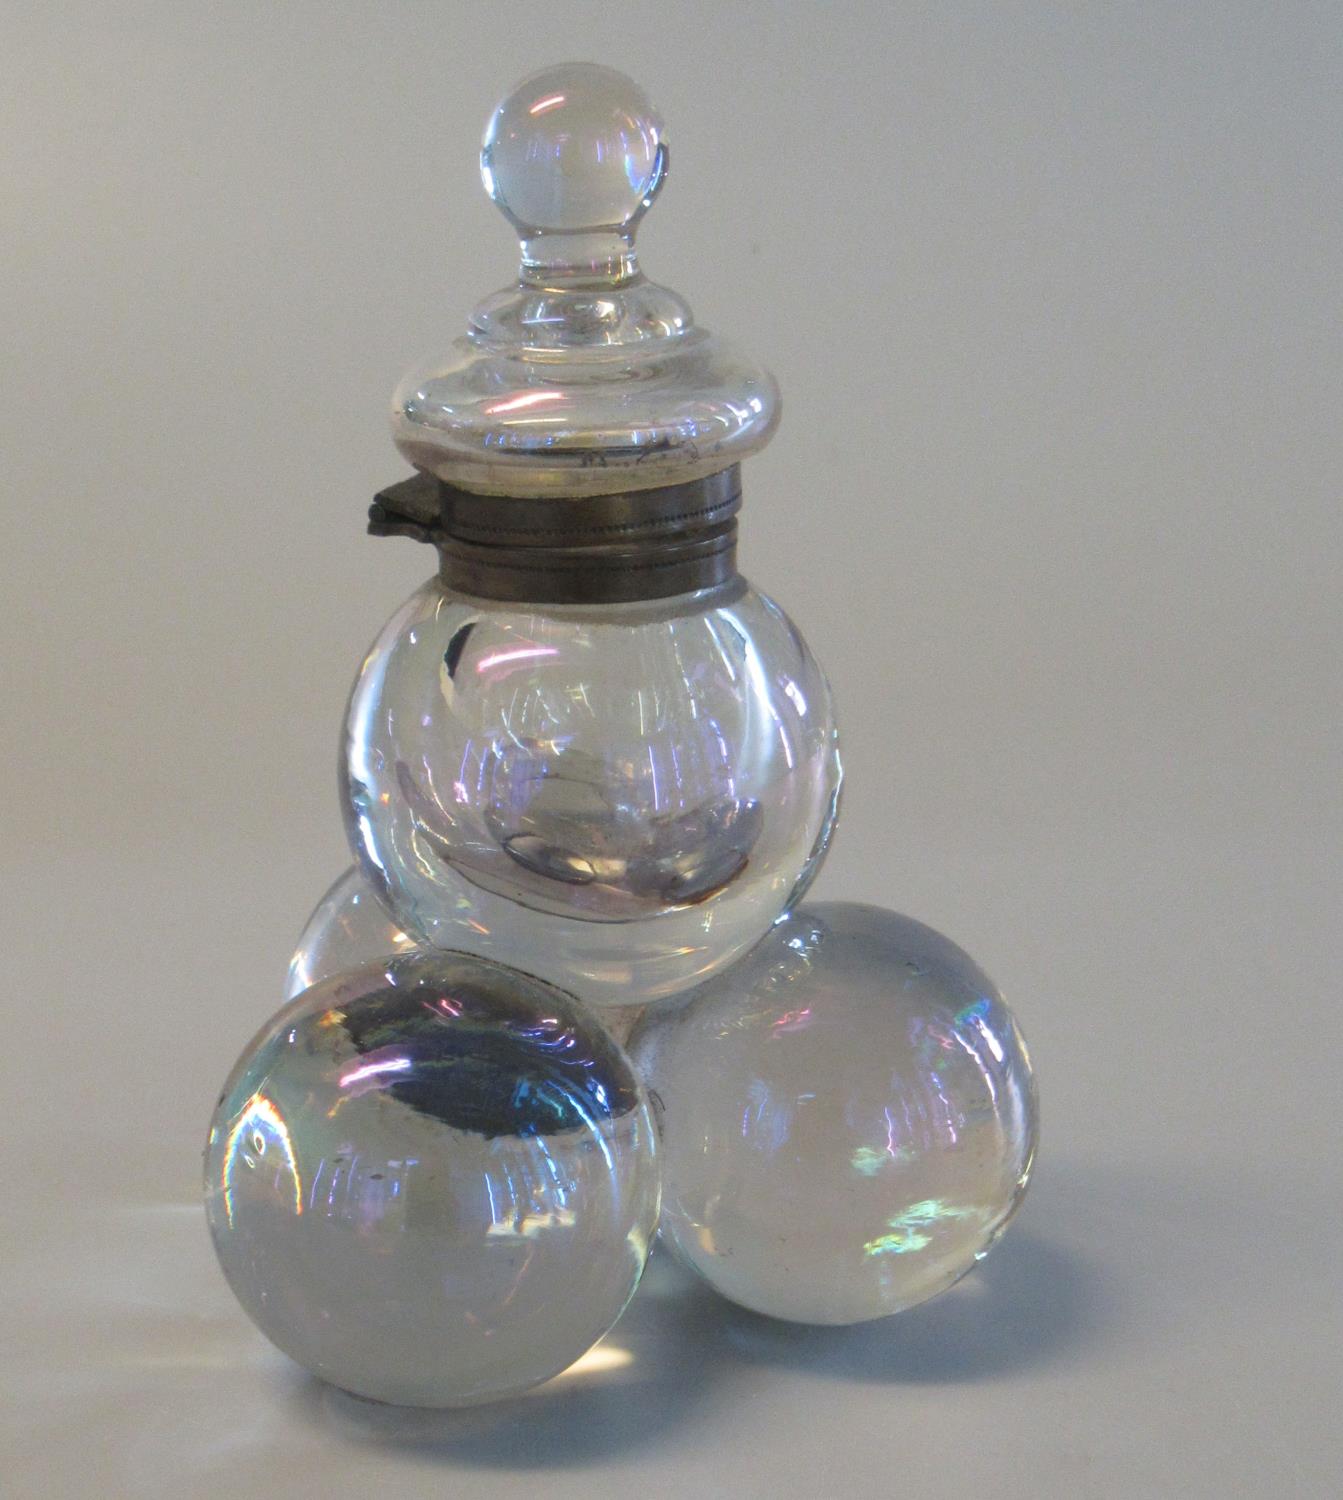 Unusual globular glass inkwell. (B.P. 21% + VAT)